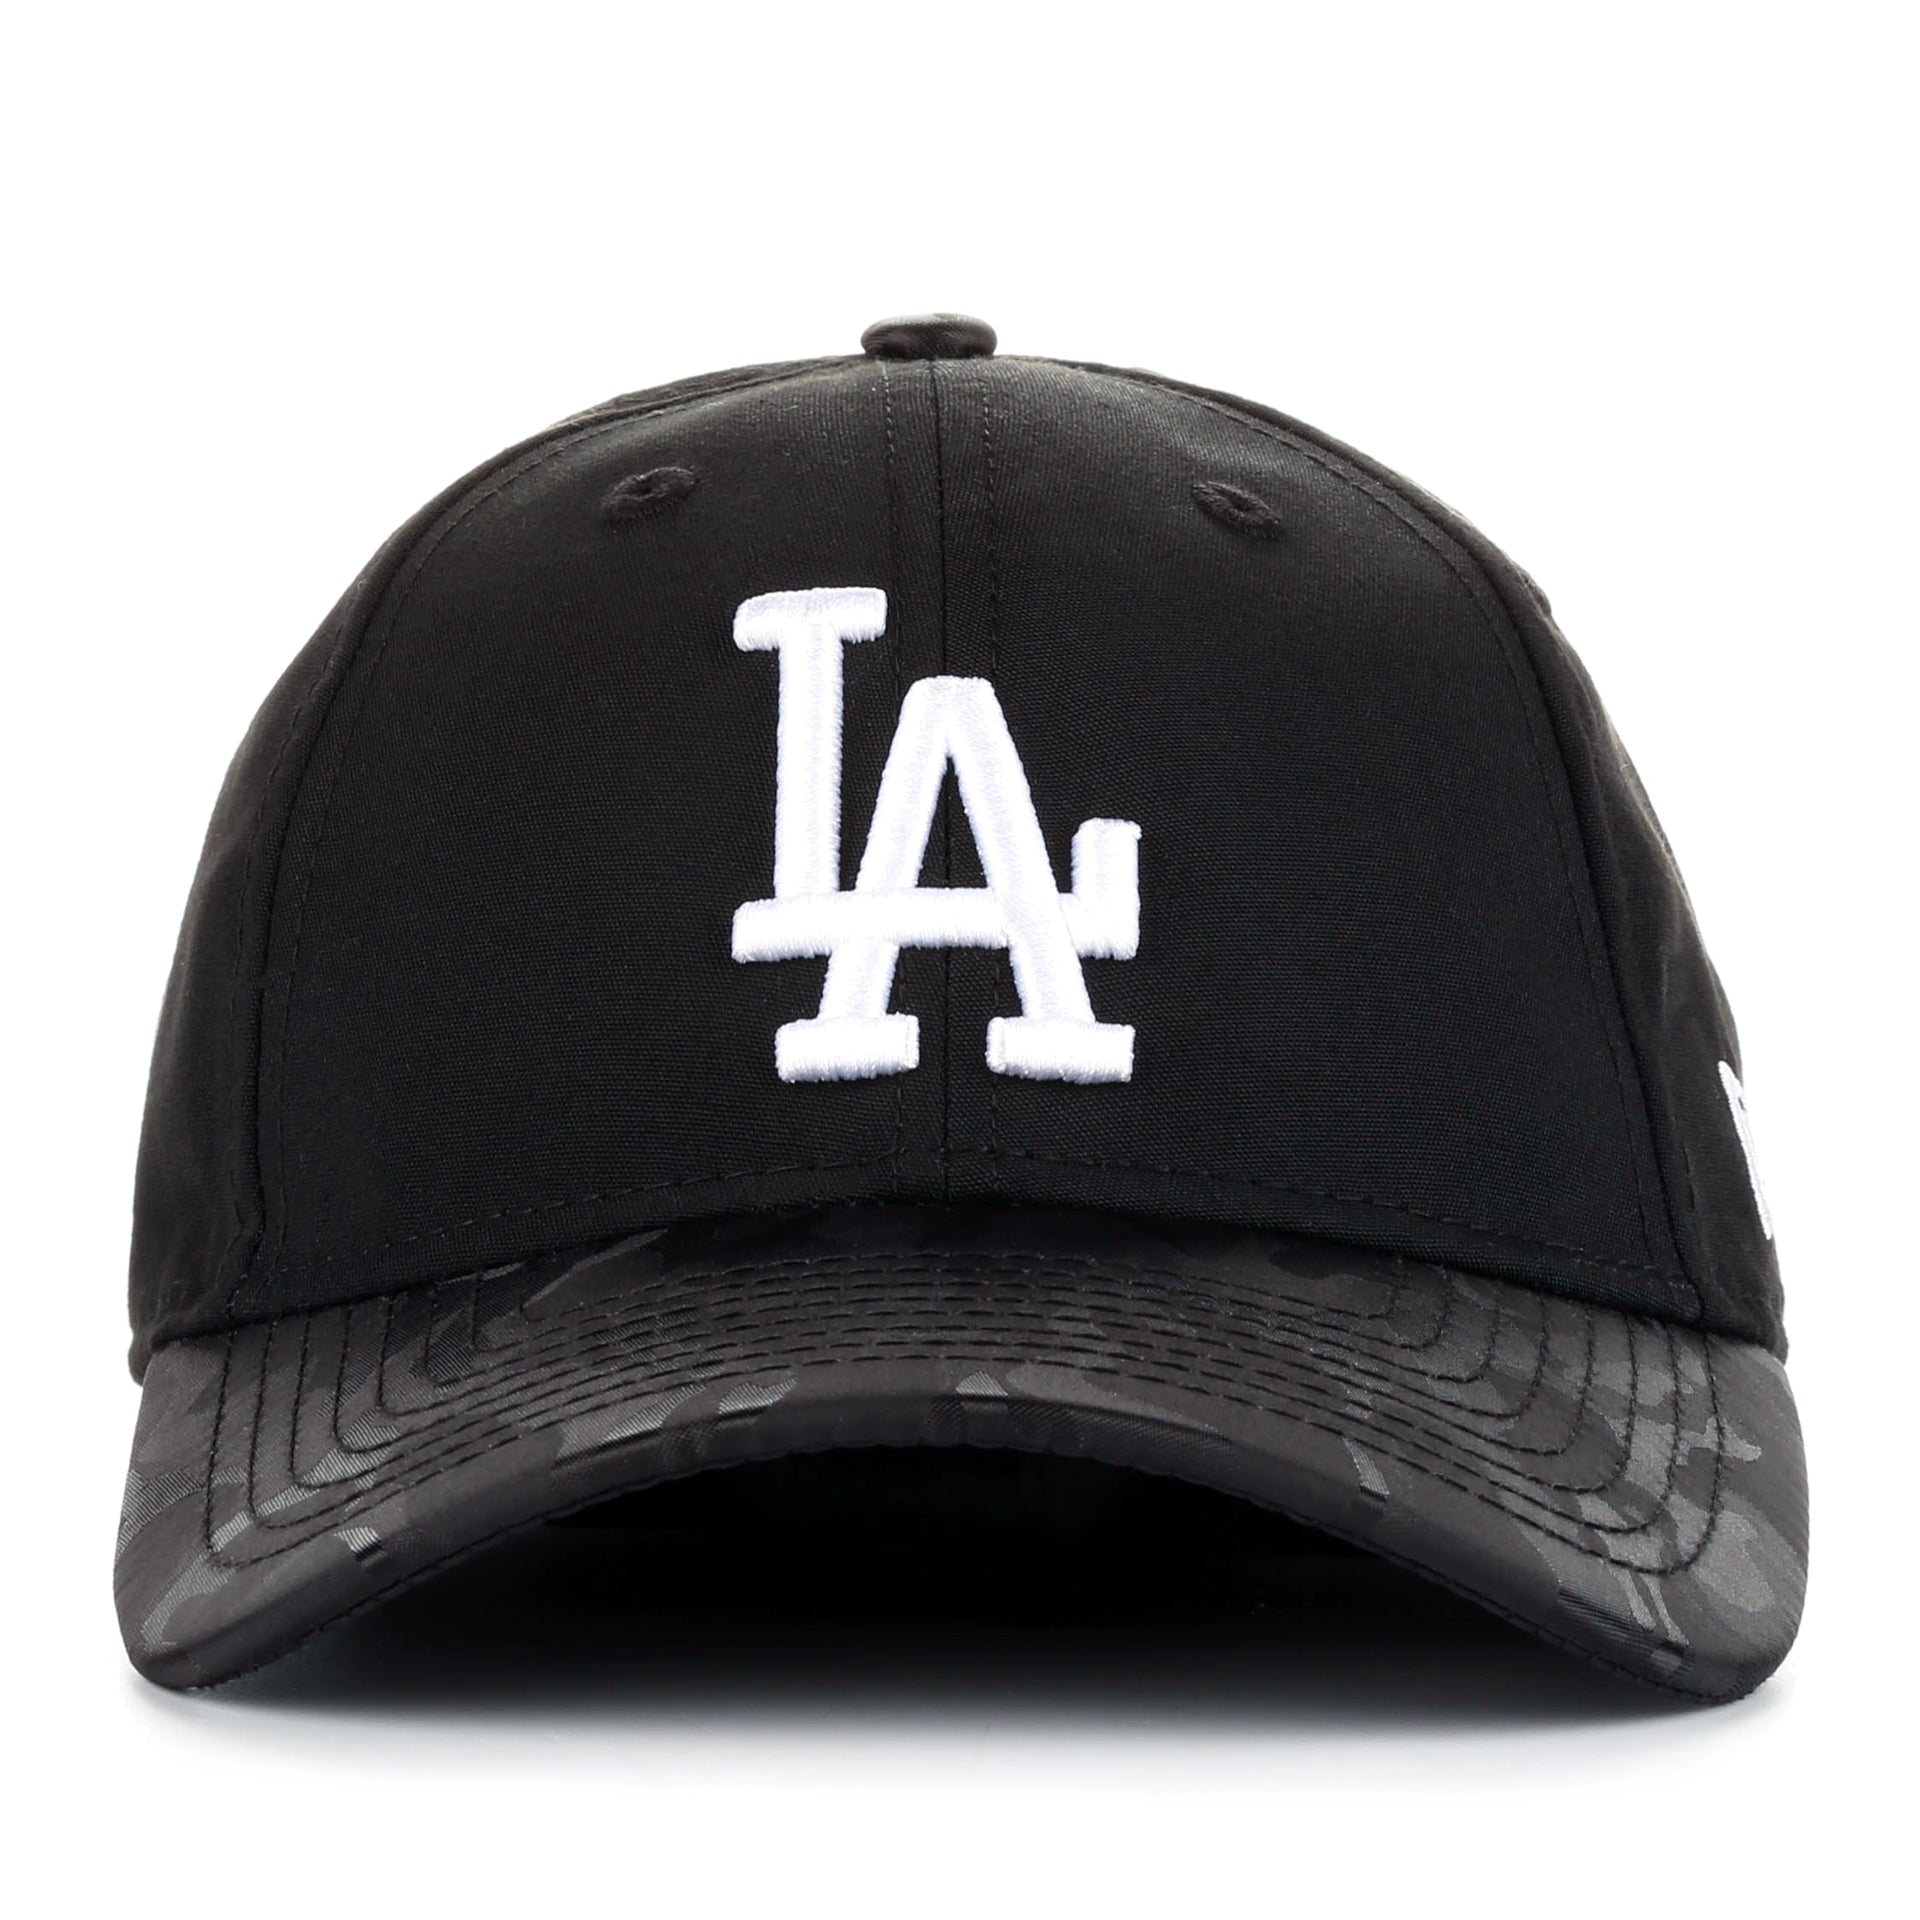 New Era 9Twenty Camo Shade Cap - Los Angeles Dodgers/Black - New Star